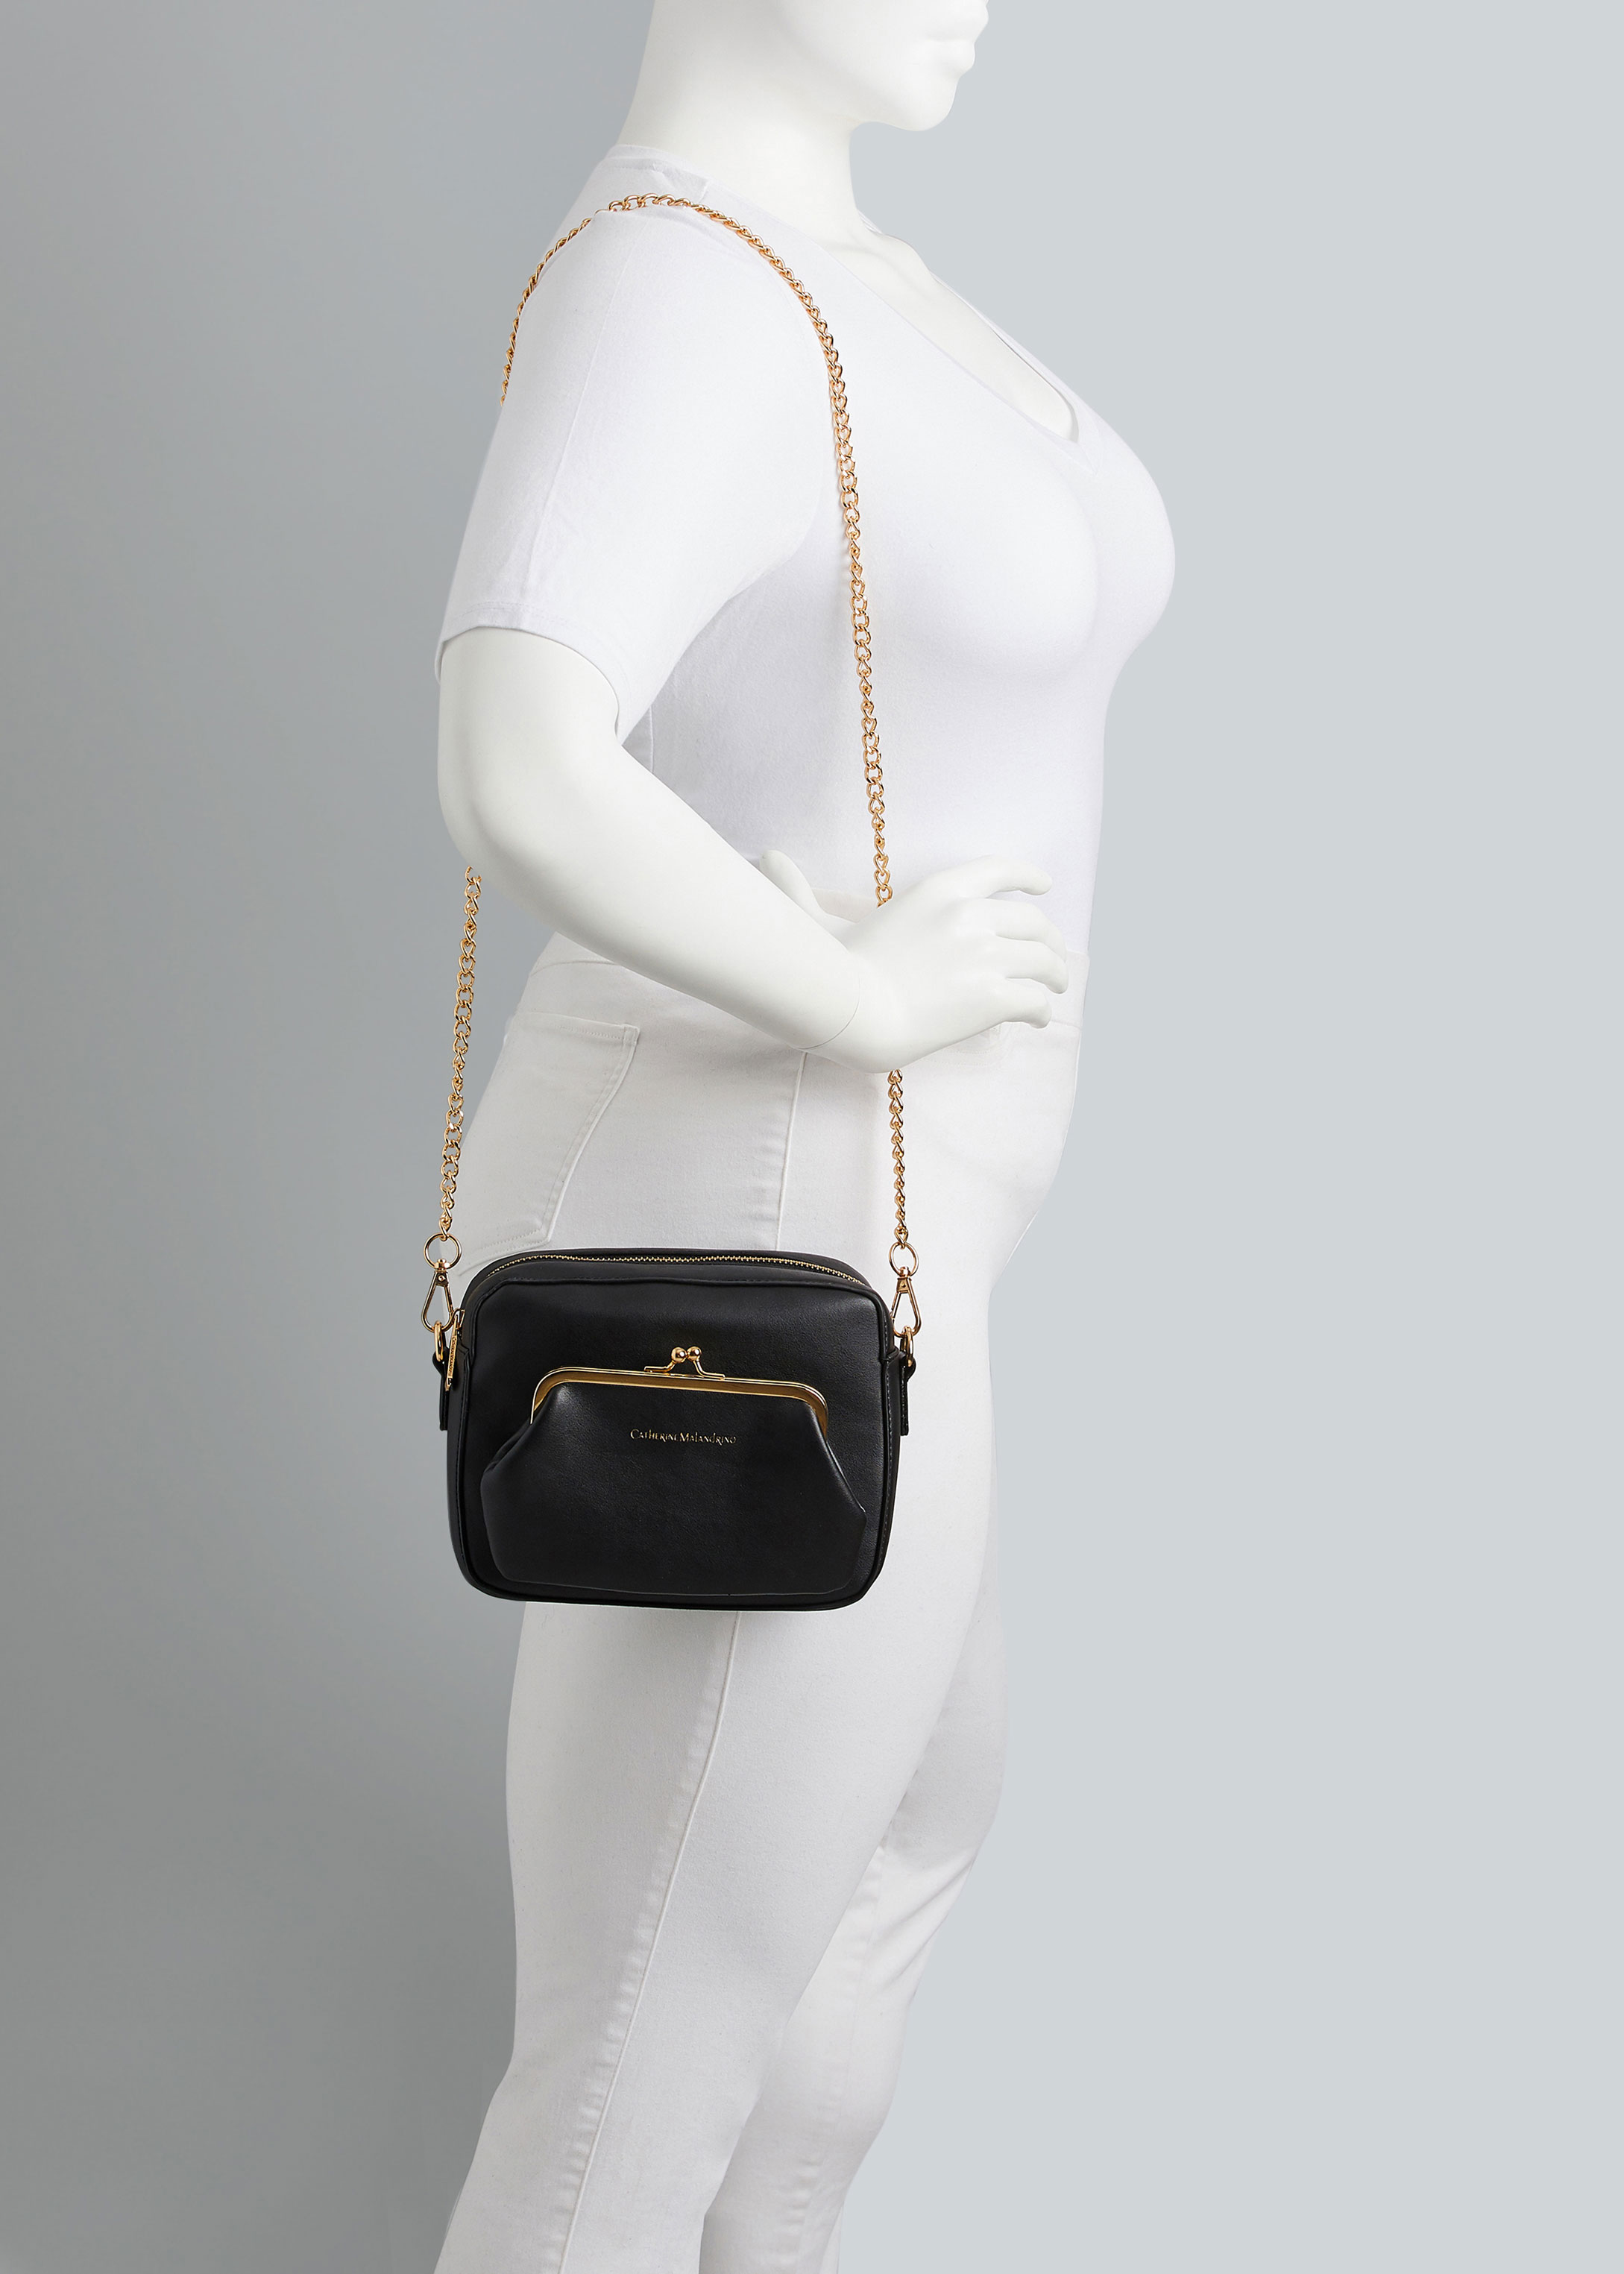 Catherine Malandrino | Bags | Catherine Malandrino White Faux Leather Handbag  New Pink Storage Bag Included | Poshmark